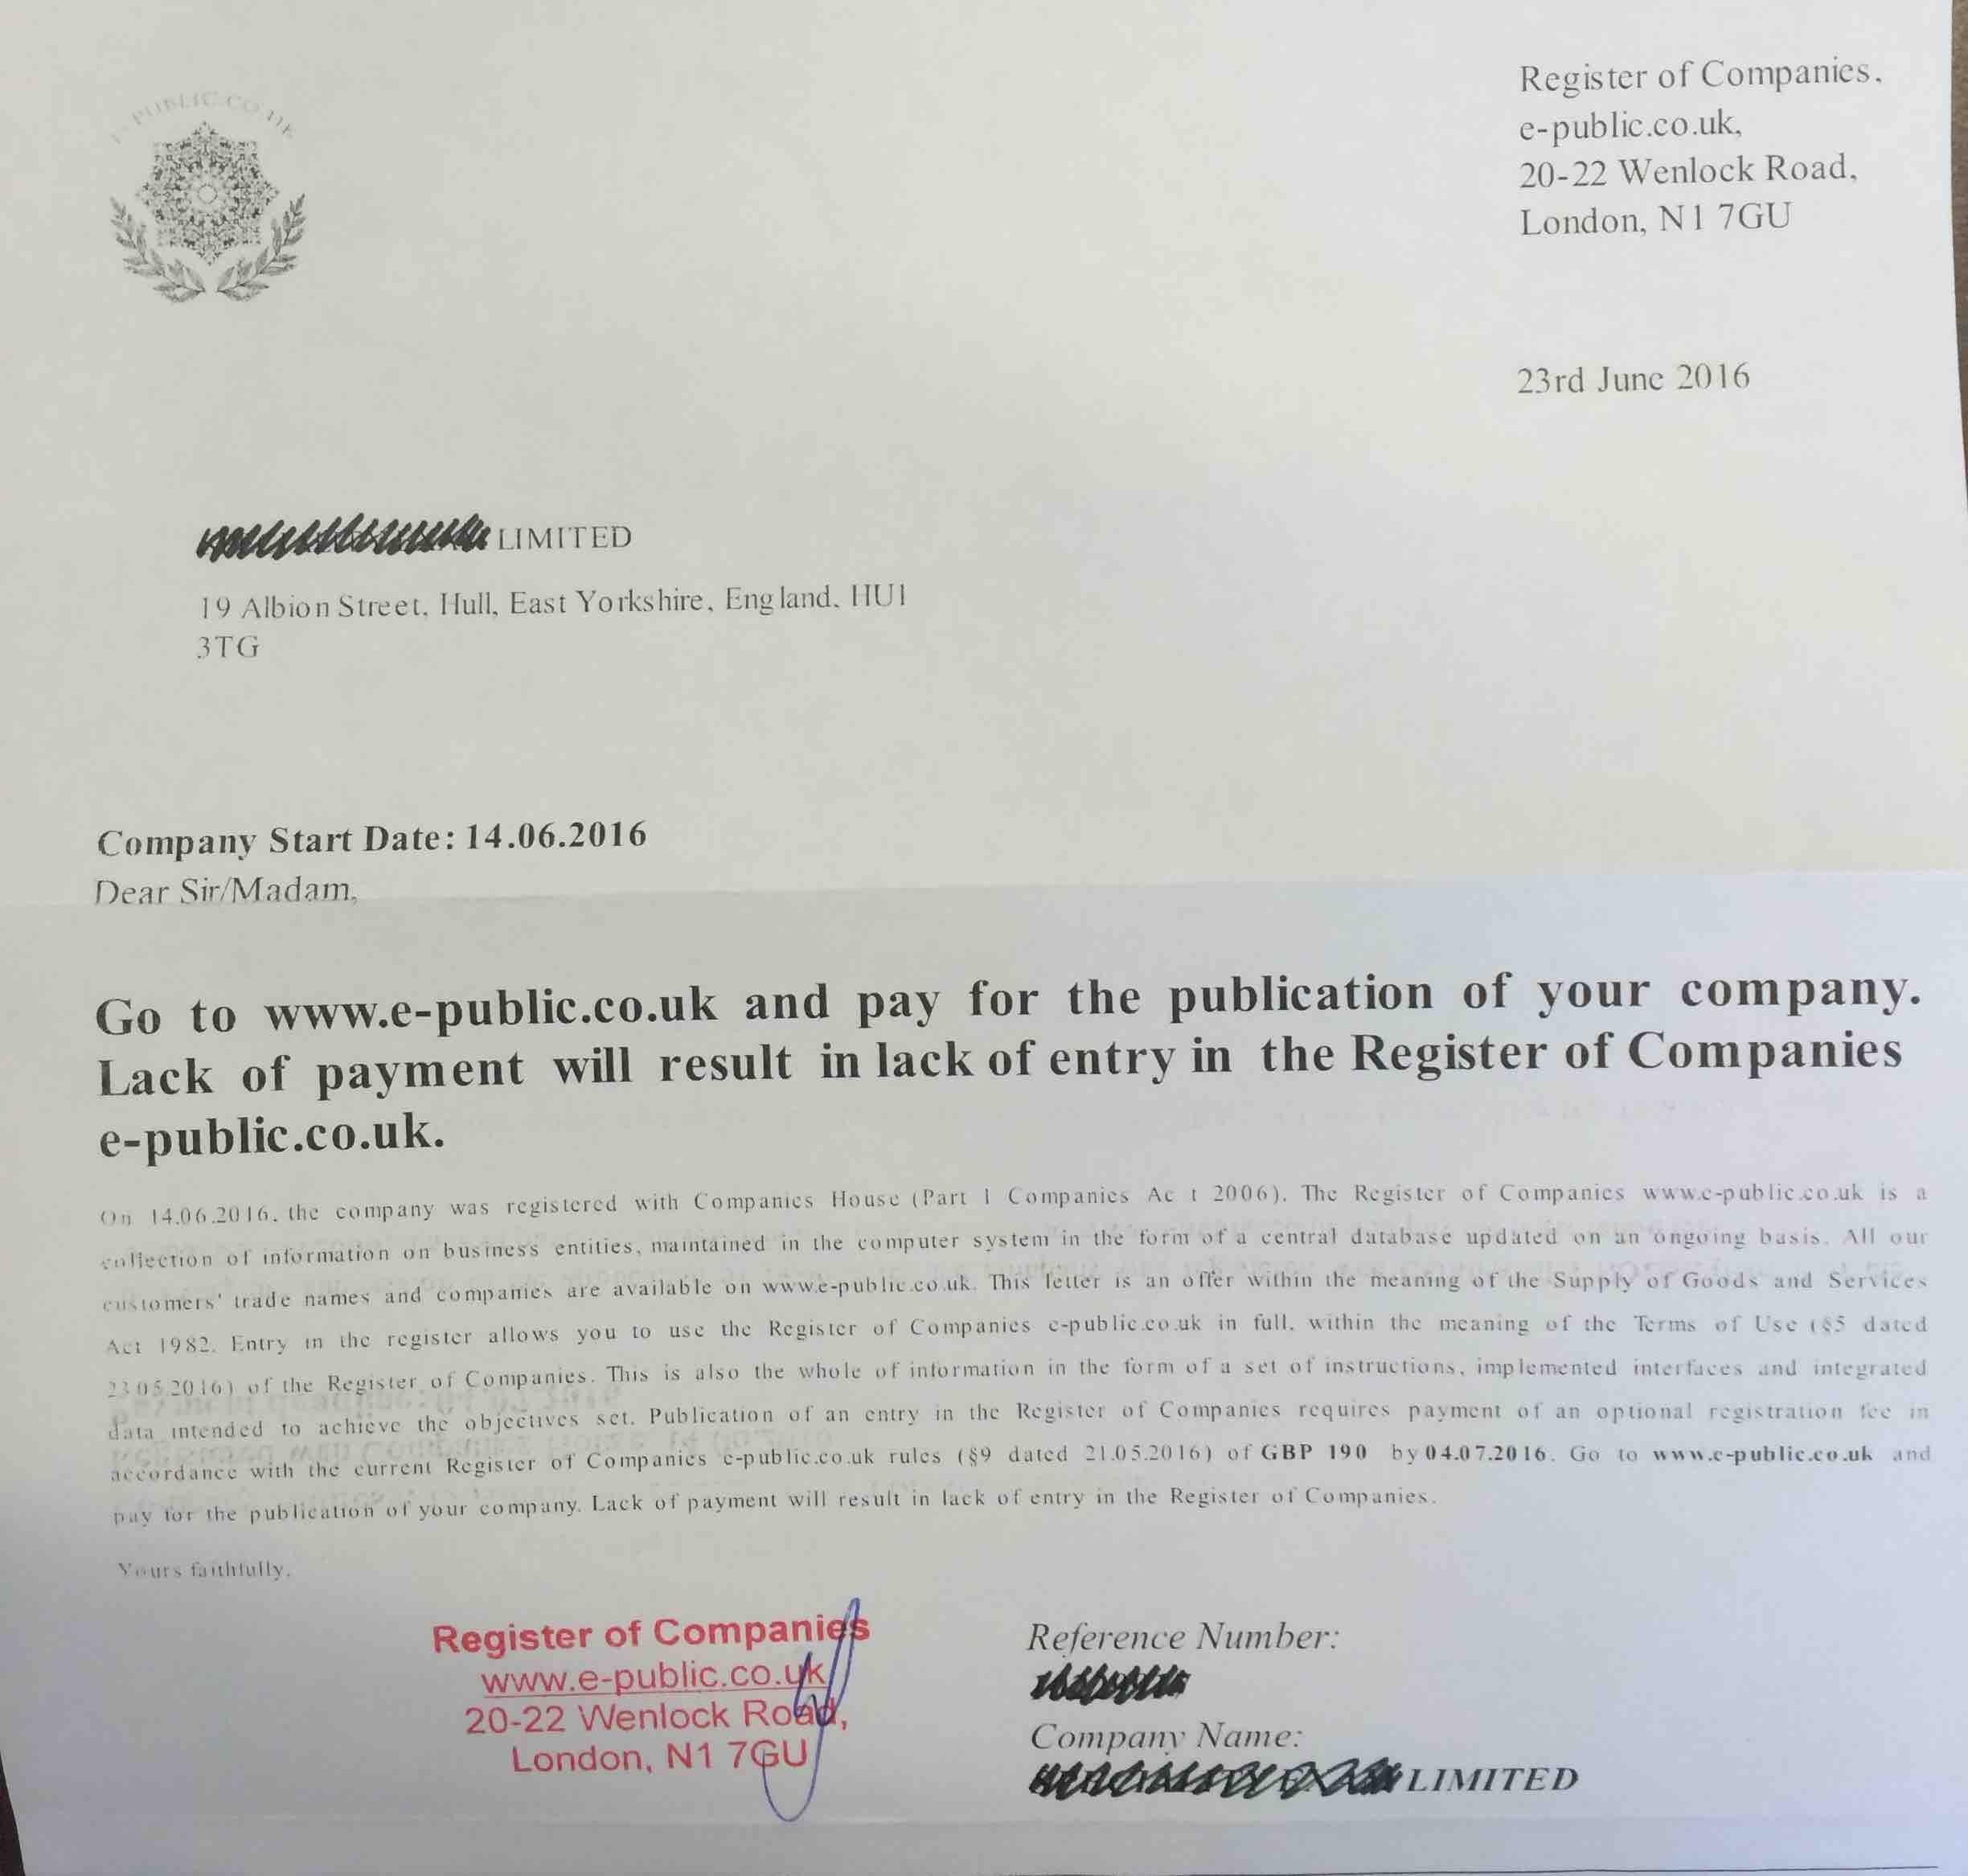 Registrar of Companies Scam Letter